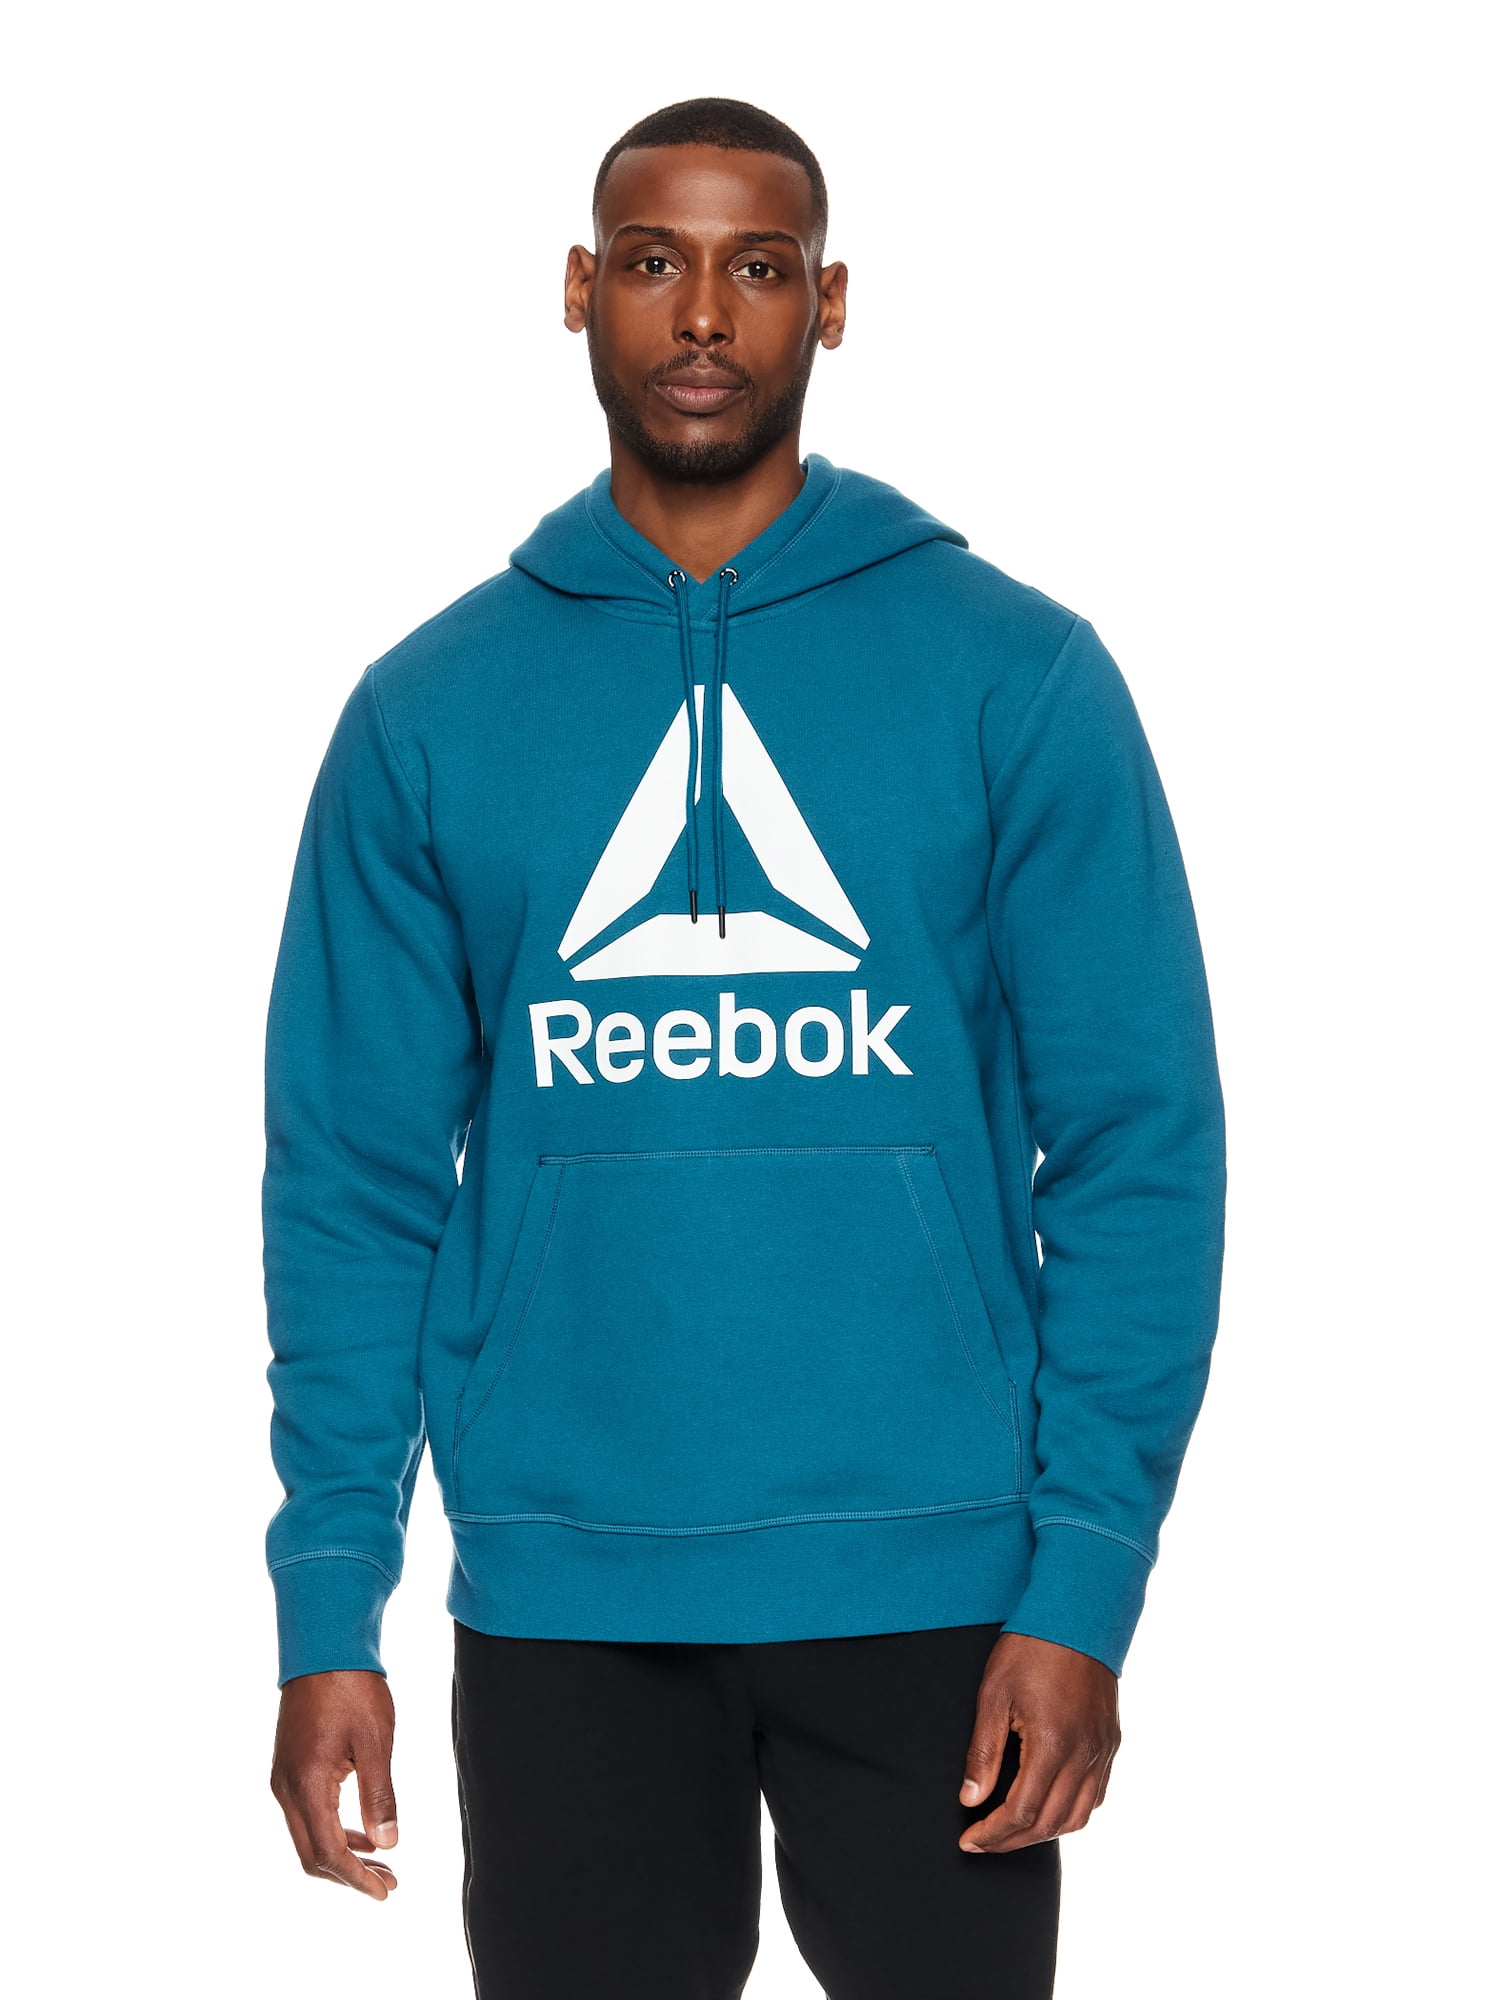 Reebok Men's Delta Logo Hoodie, Sizes S-3XL